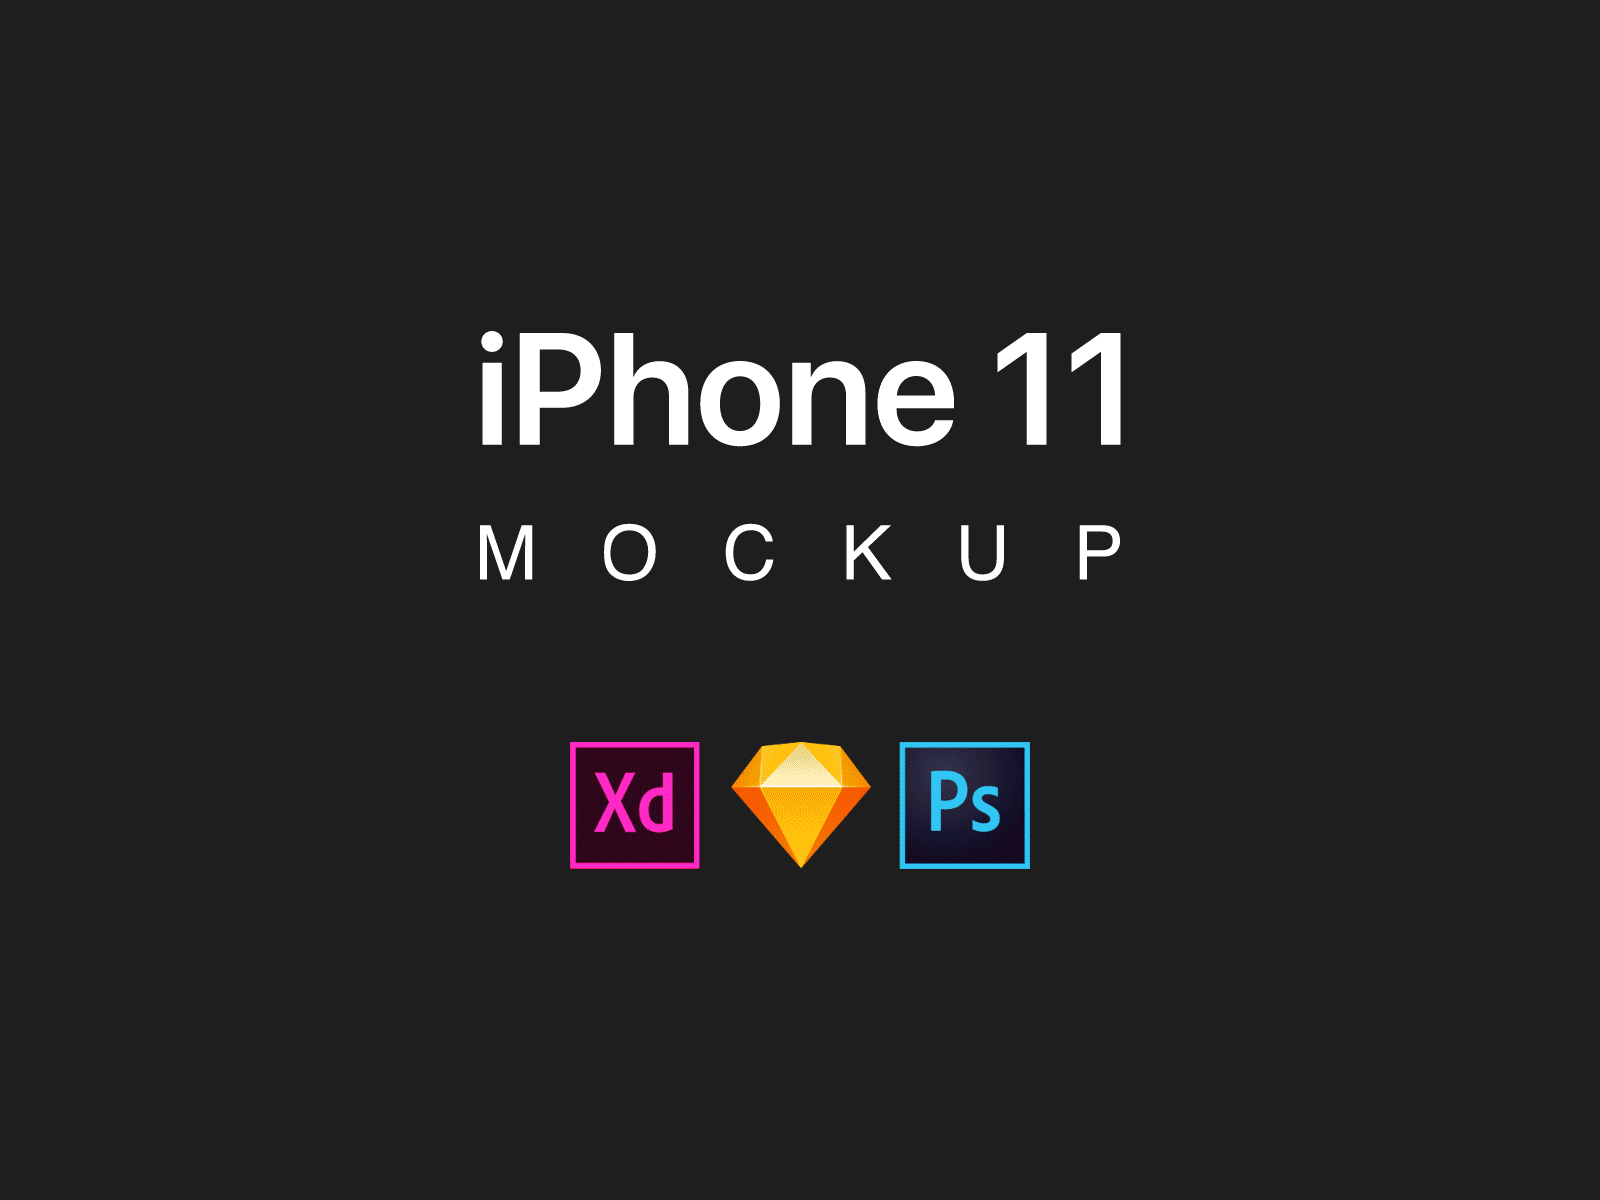 iPhone 11 Mockups